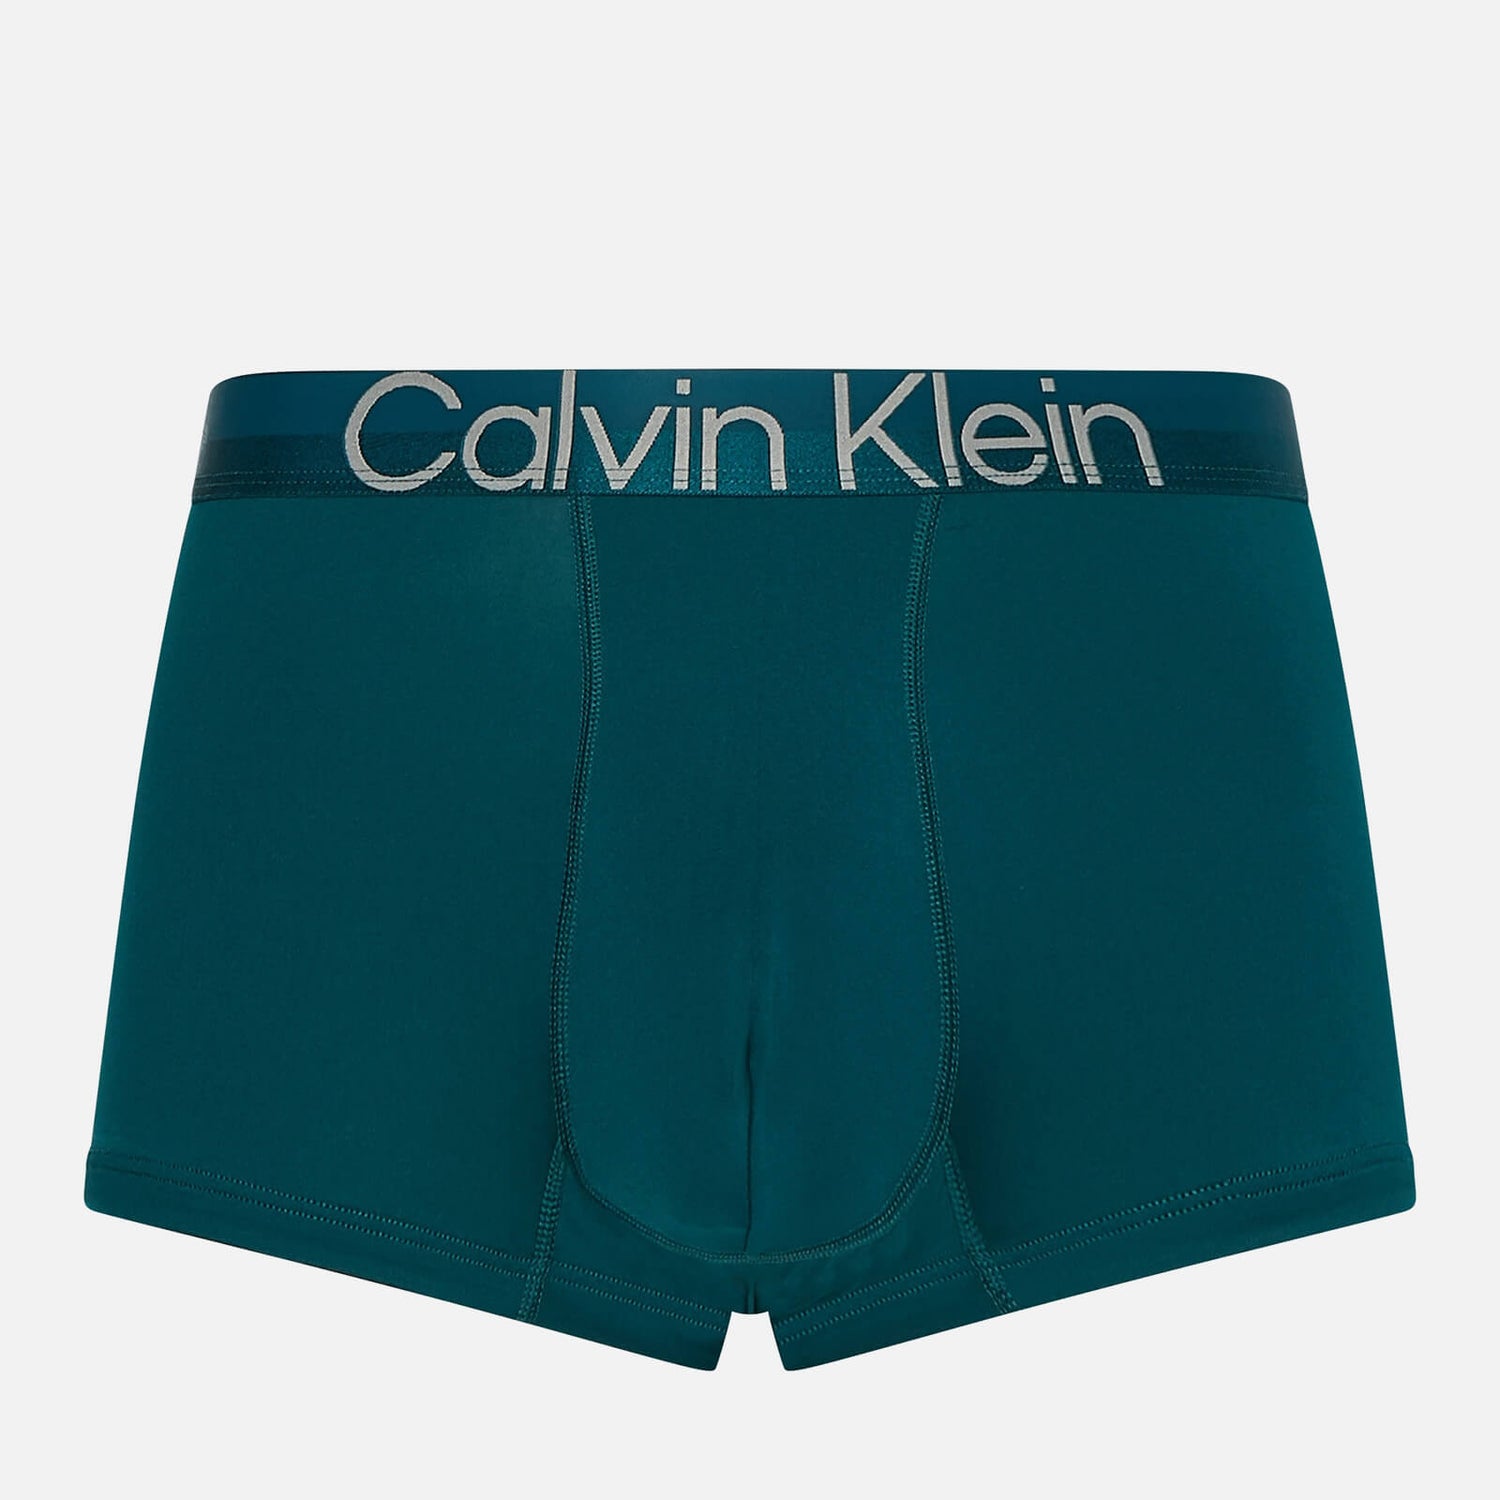 Calvin Klein Men's Low Rise Trunk Boxers - Maya Blue